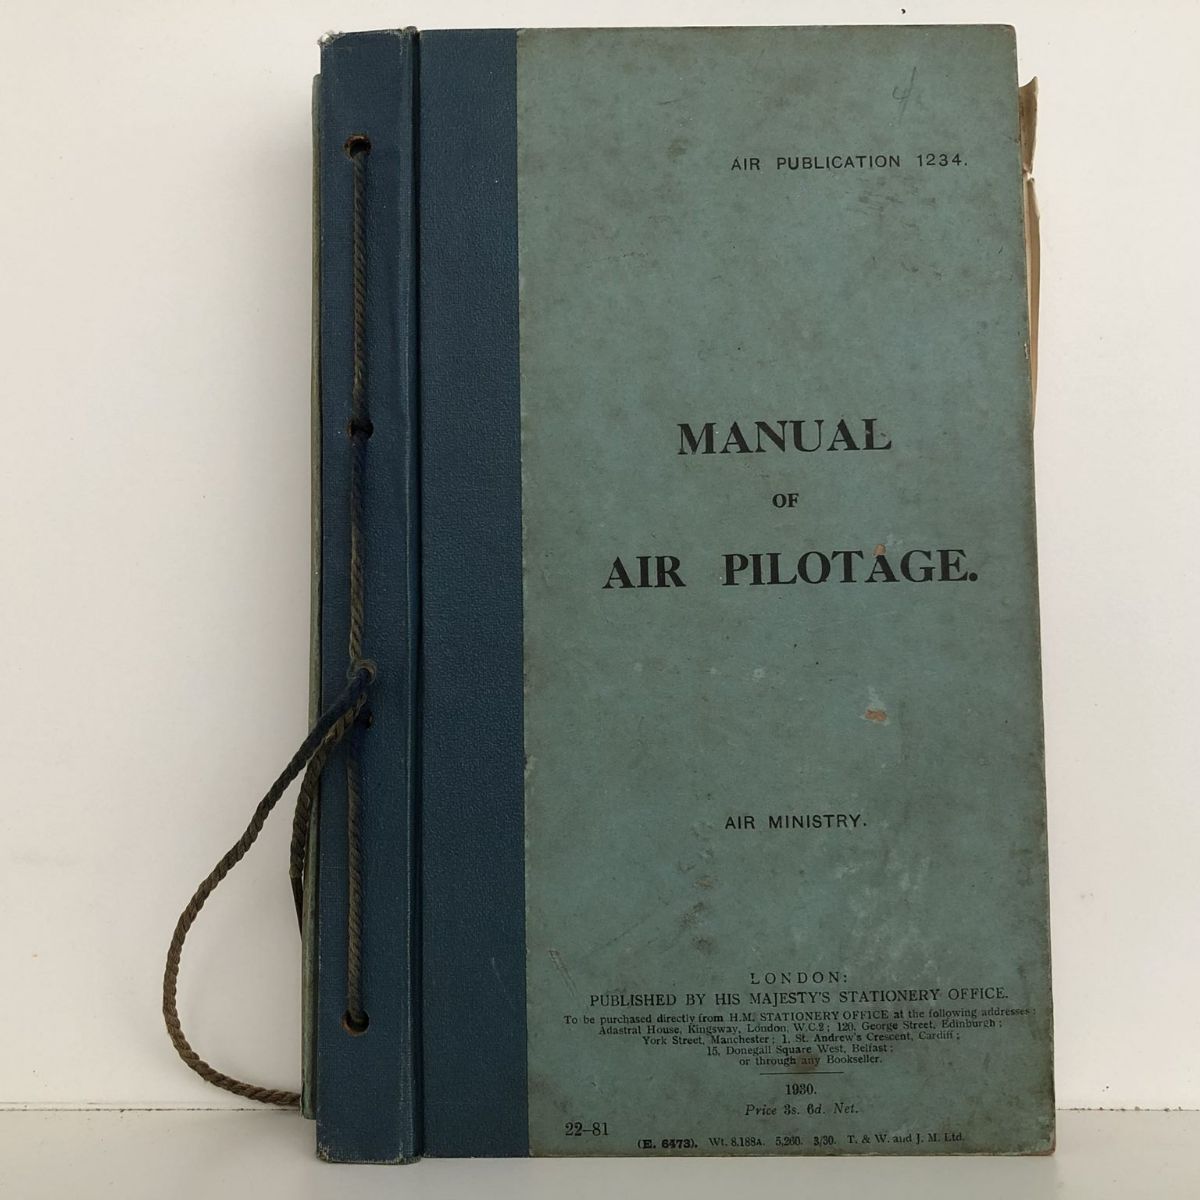 MANUAL OF AIR PILOTAGE 1930 - Air Publication No. 1234